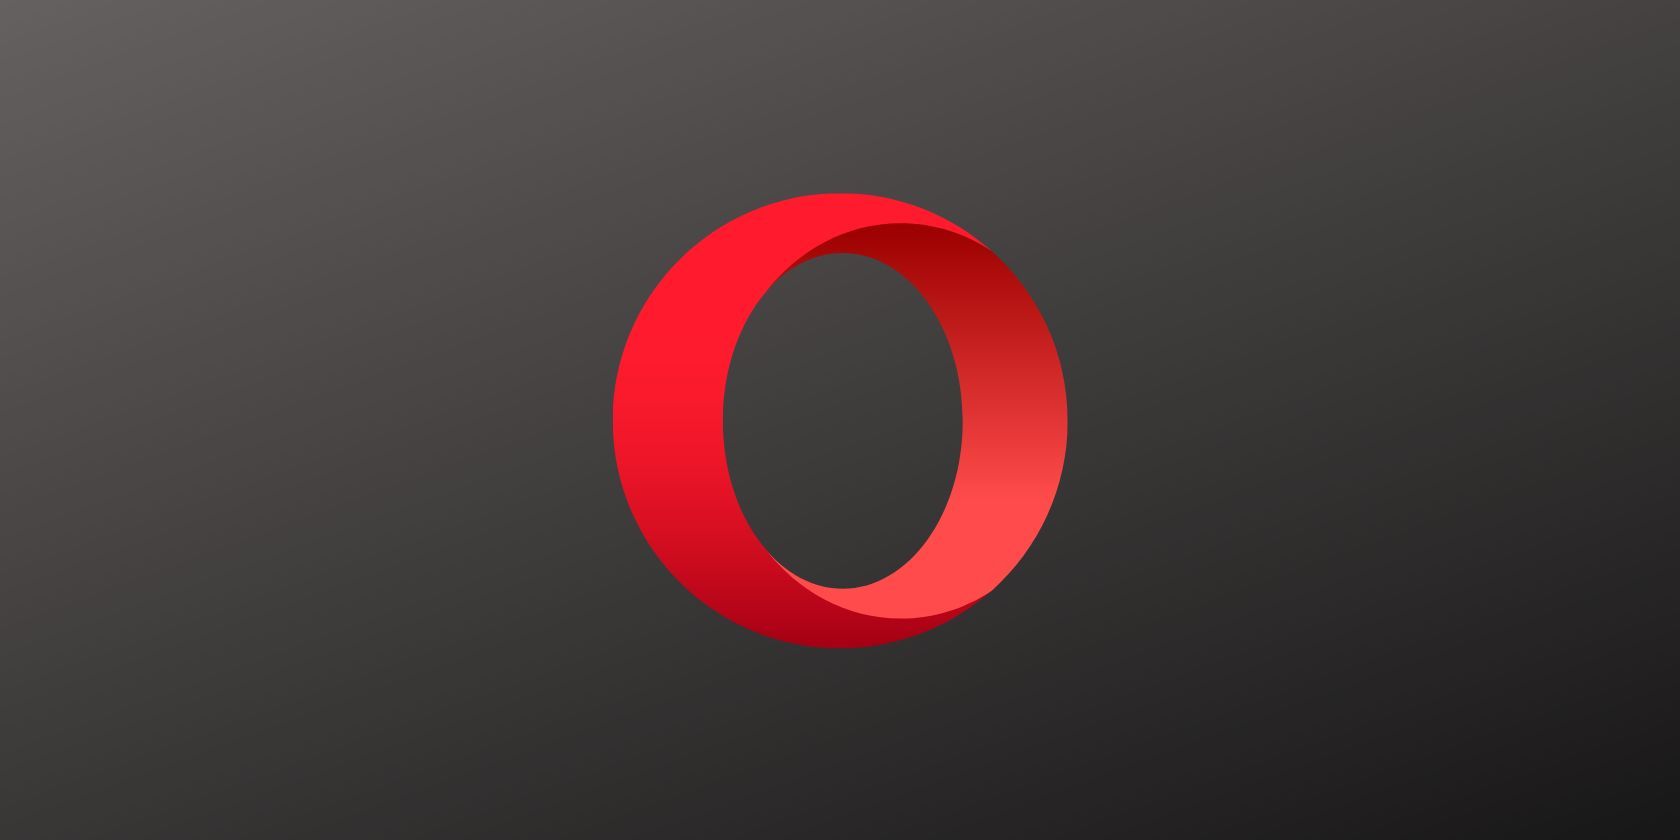 Opera browser logo seen on black background